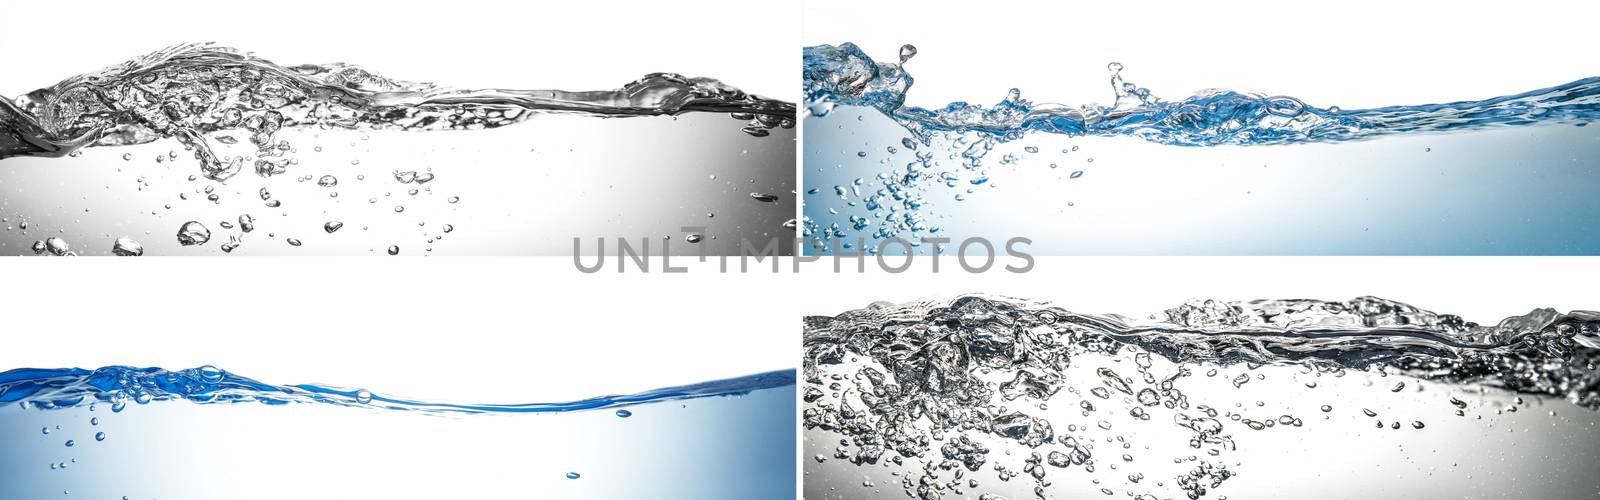 water splash collage in white background by photobeps